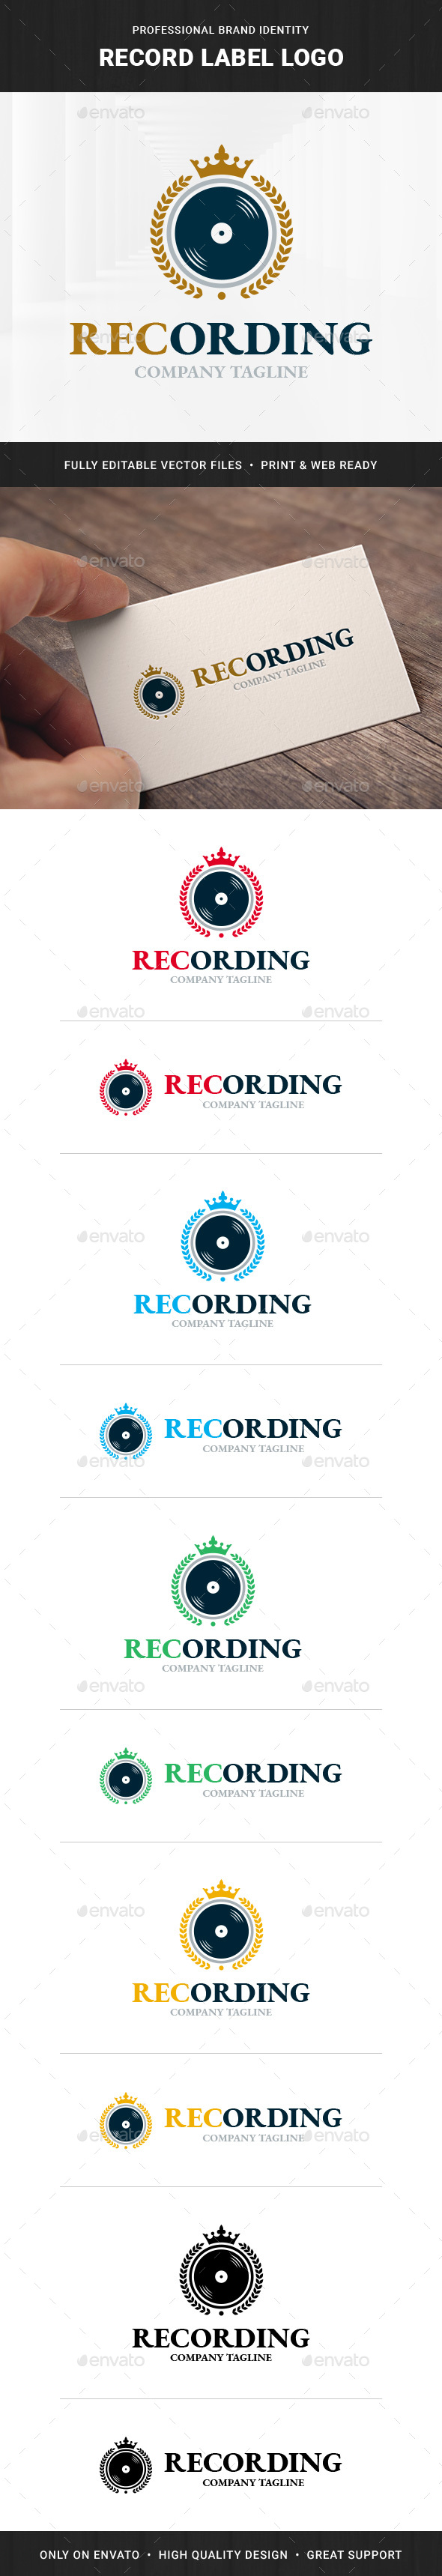 Record Label Logo Template